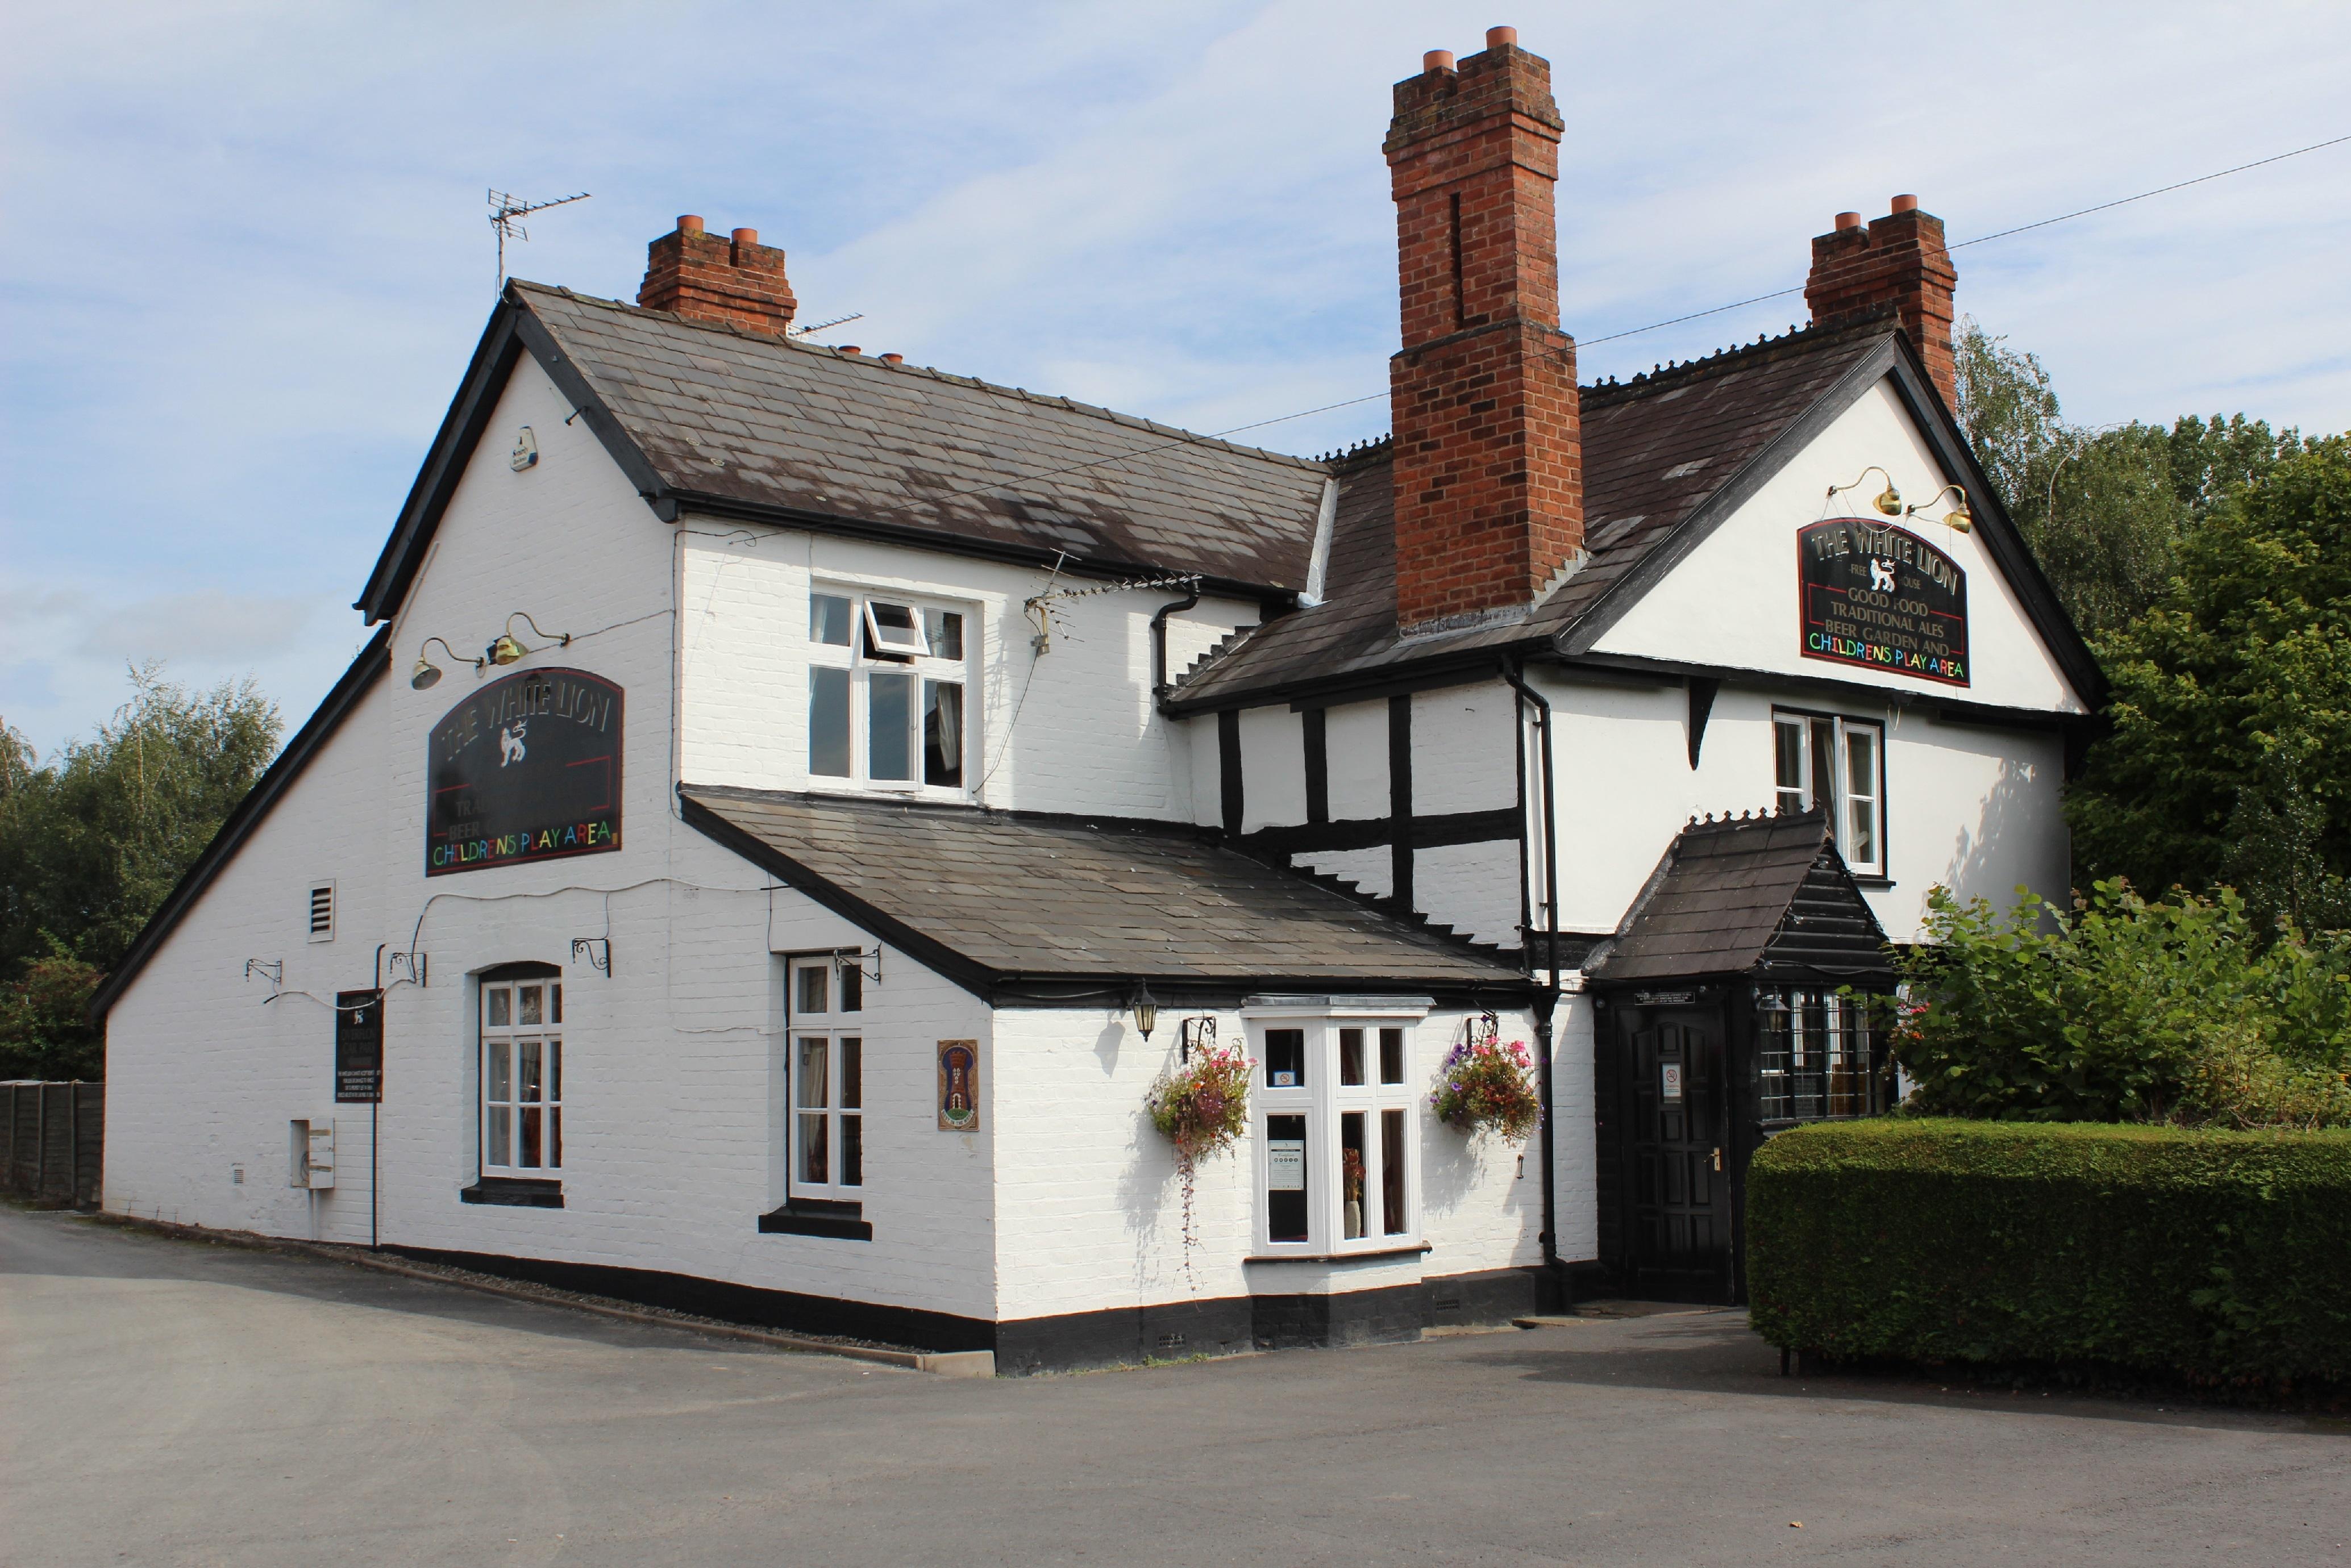 The White Lion Inn